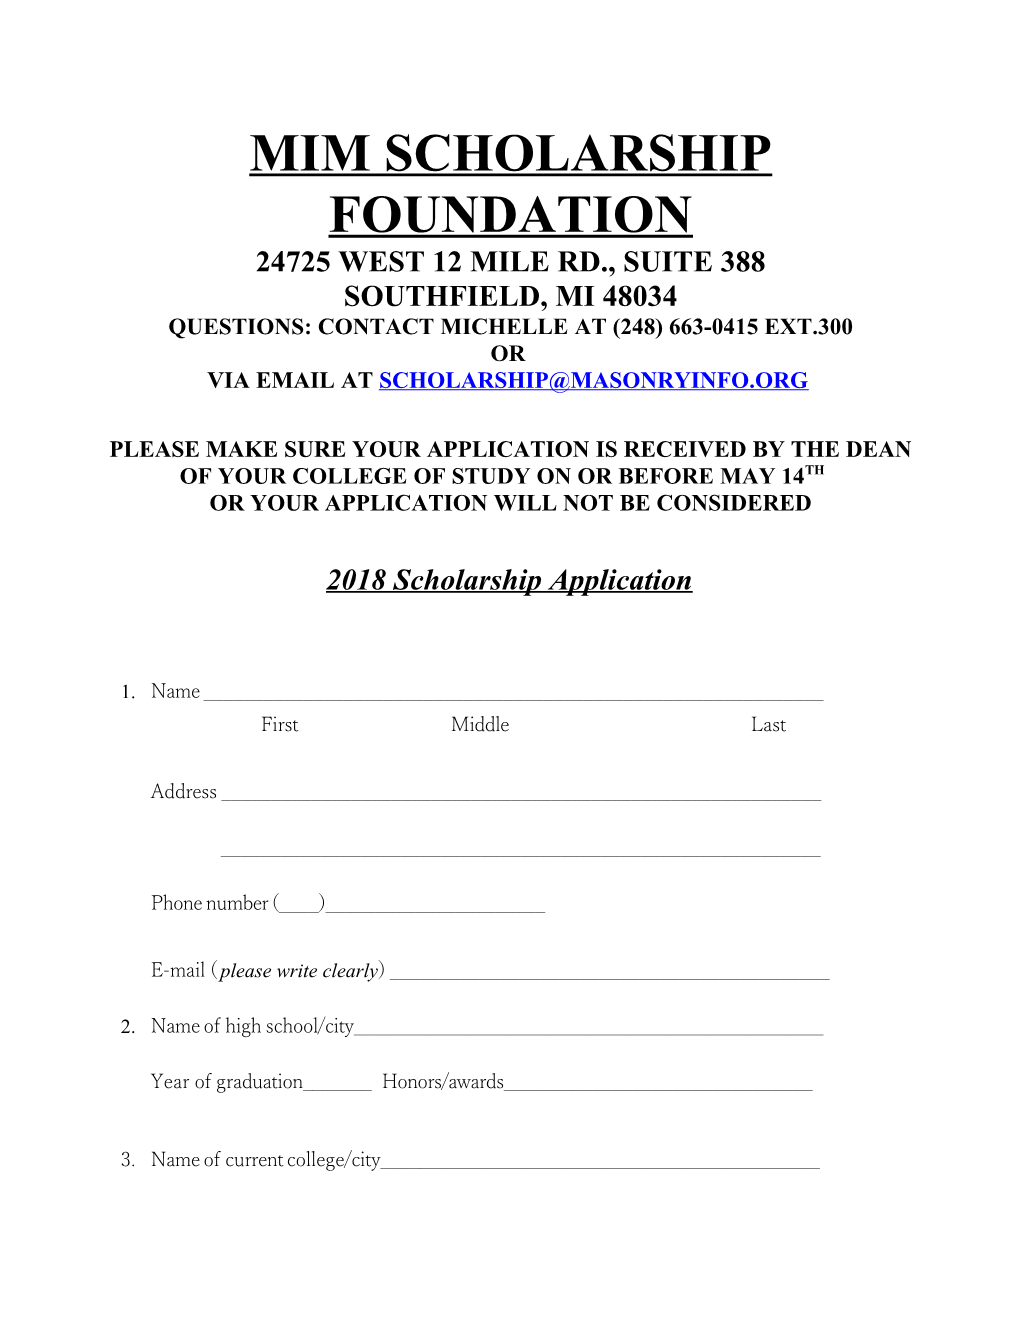 MIM Scholarship Foundation